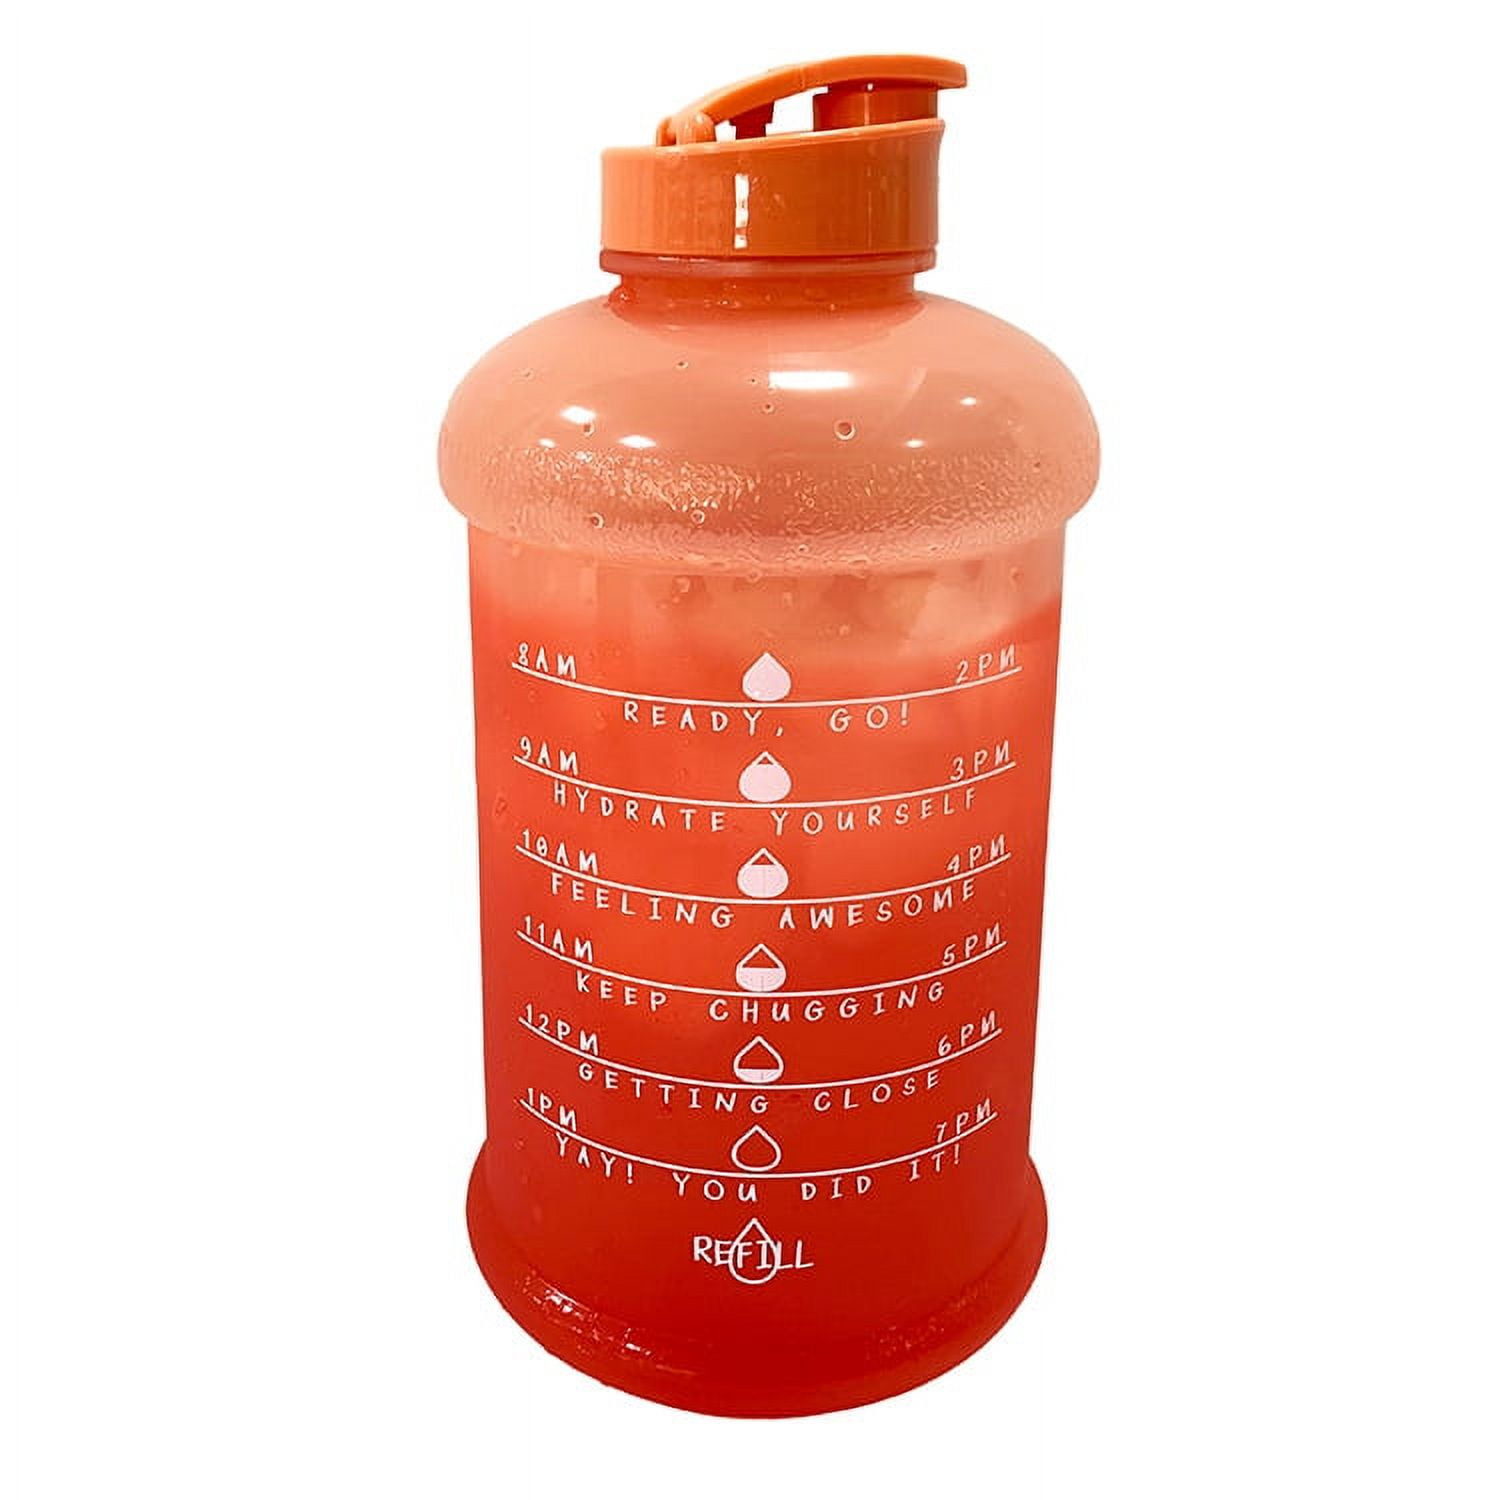 Mueller Quart Water Bottle, Red Lid